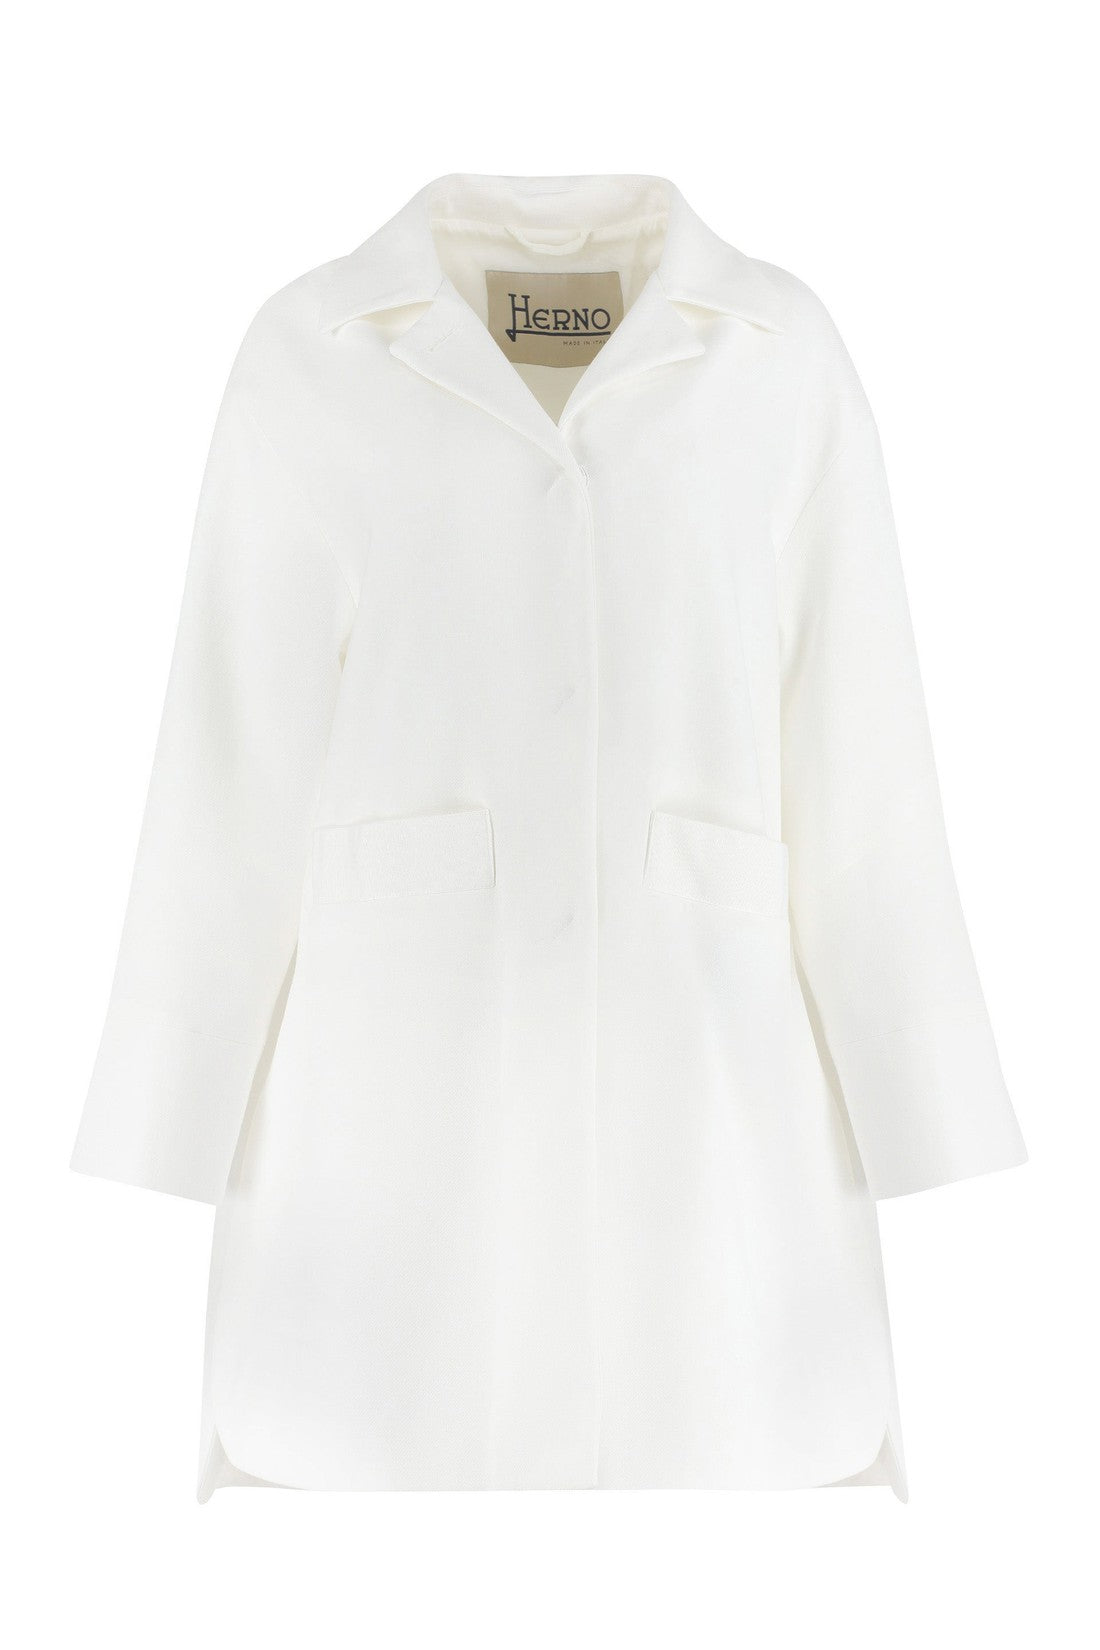 Herno-OUTLET-SALE-Cotton jacket-ARCHIVIST